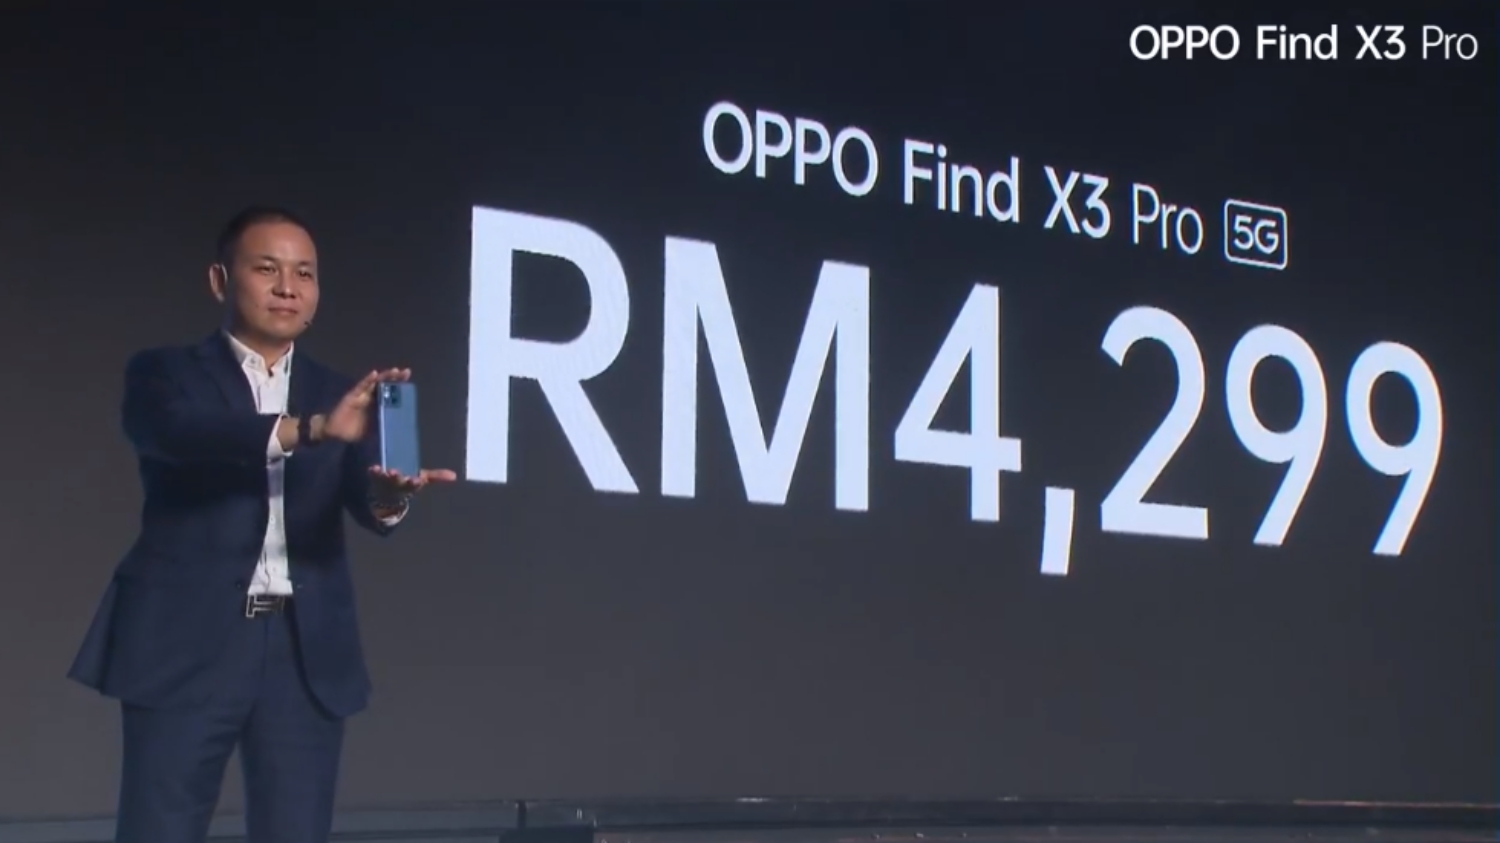 Oppo Find X3 Pro Boleh Didapati Di Malaysia Pada Harga RM4299